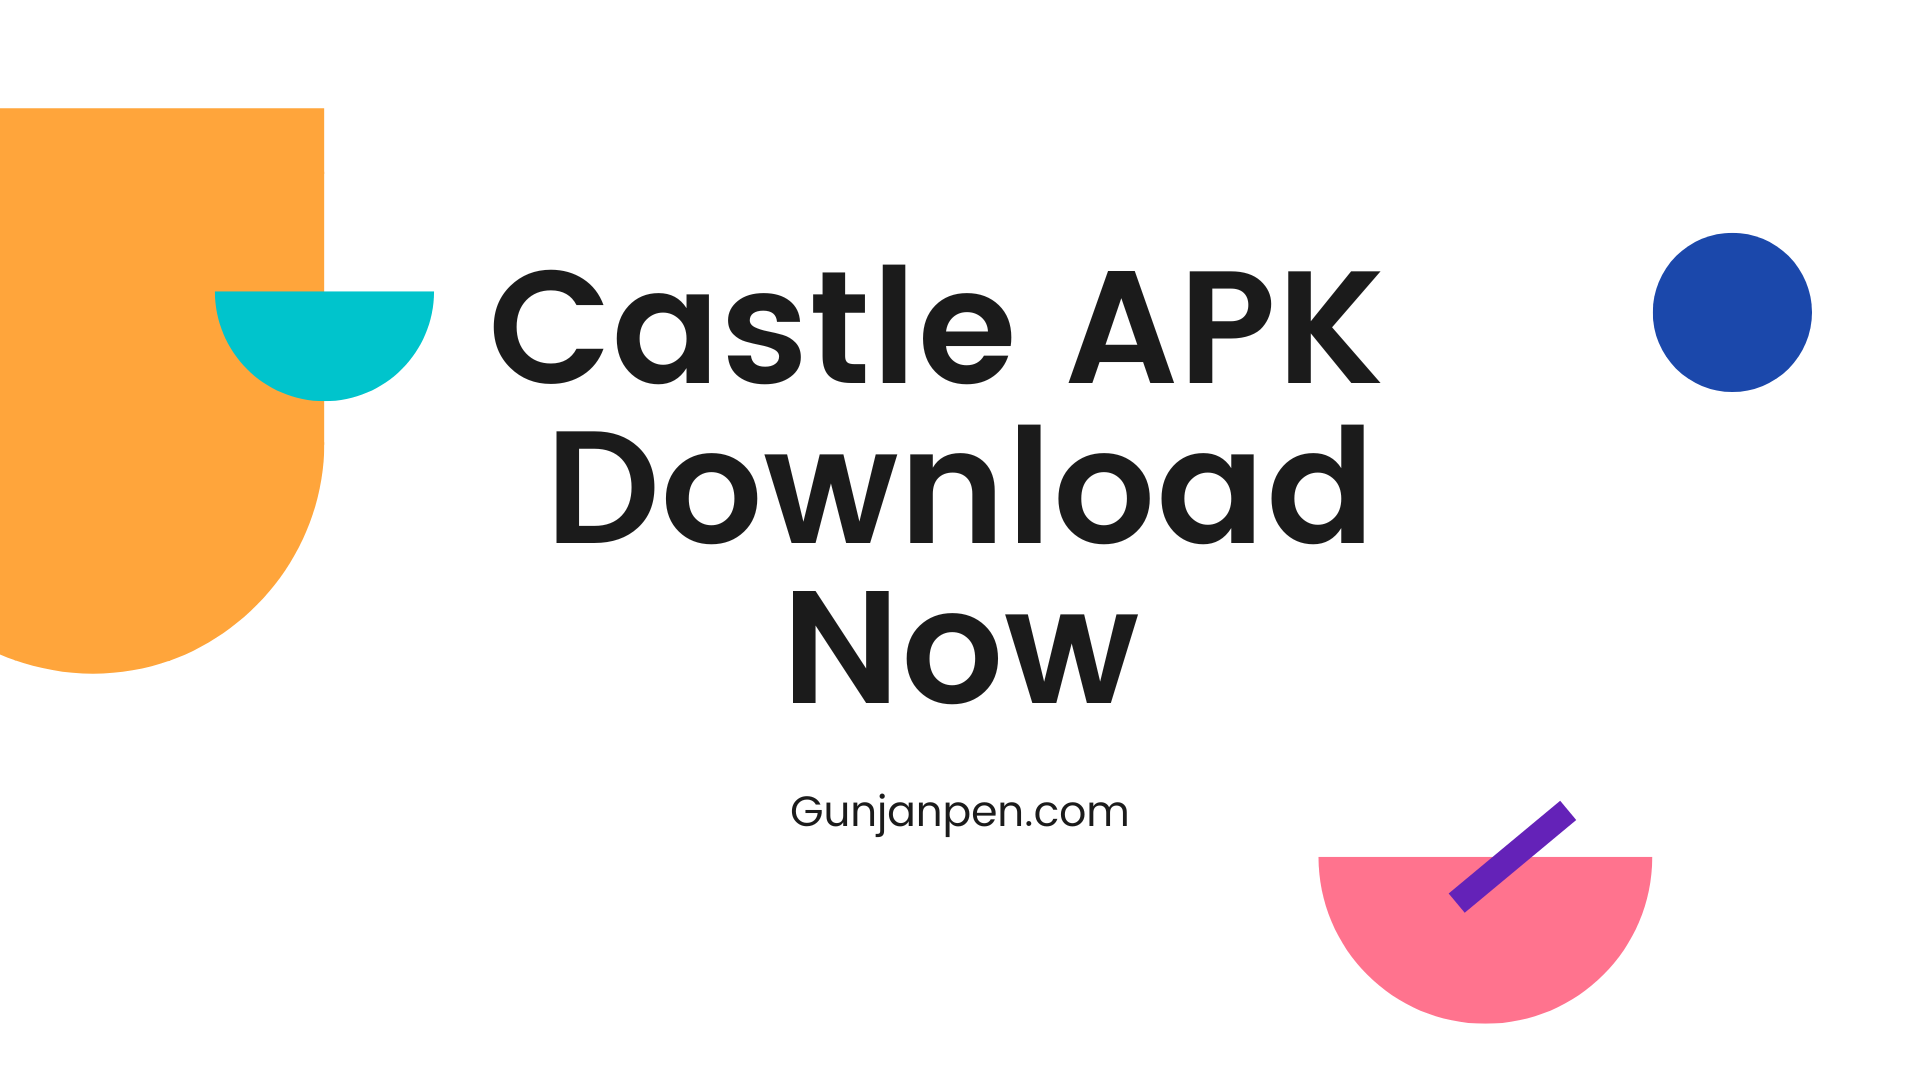 Castle APK